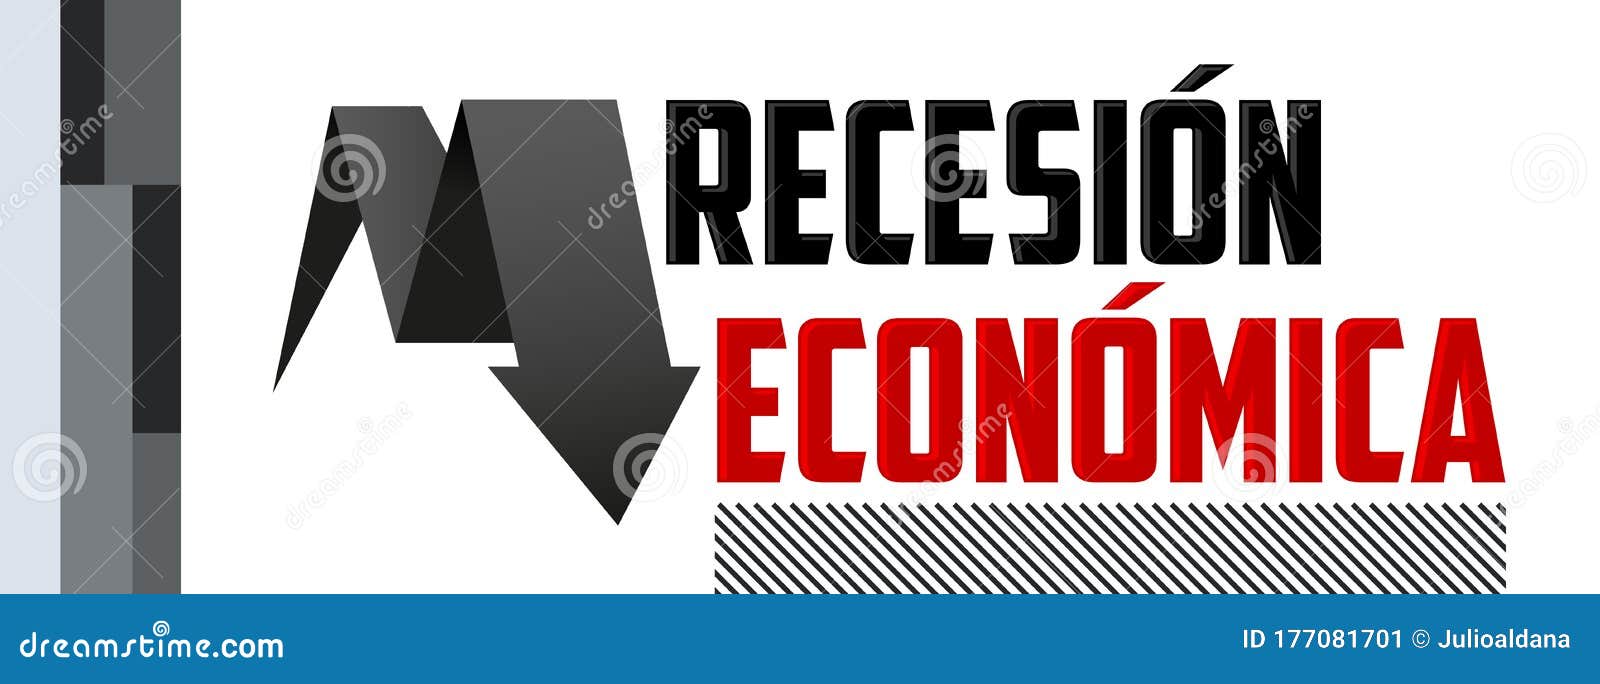 recesion economica, economic recession spanish text  .